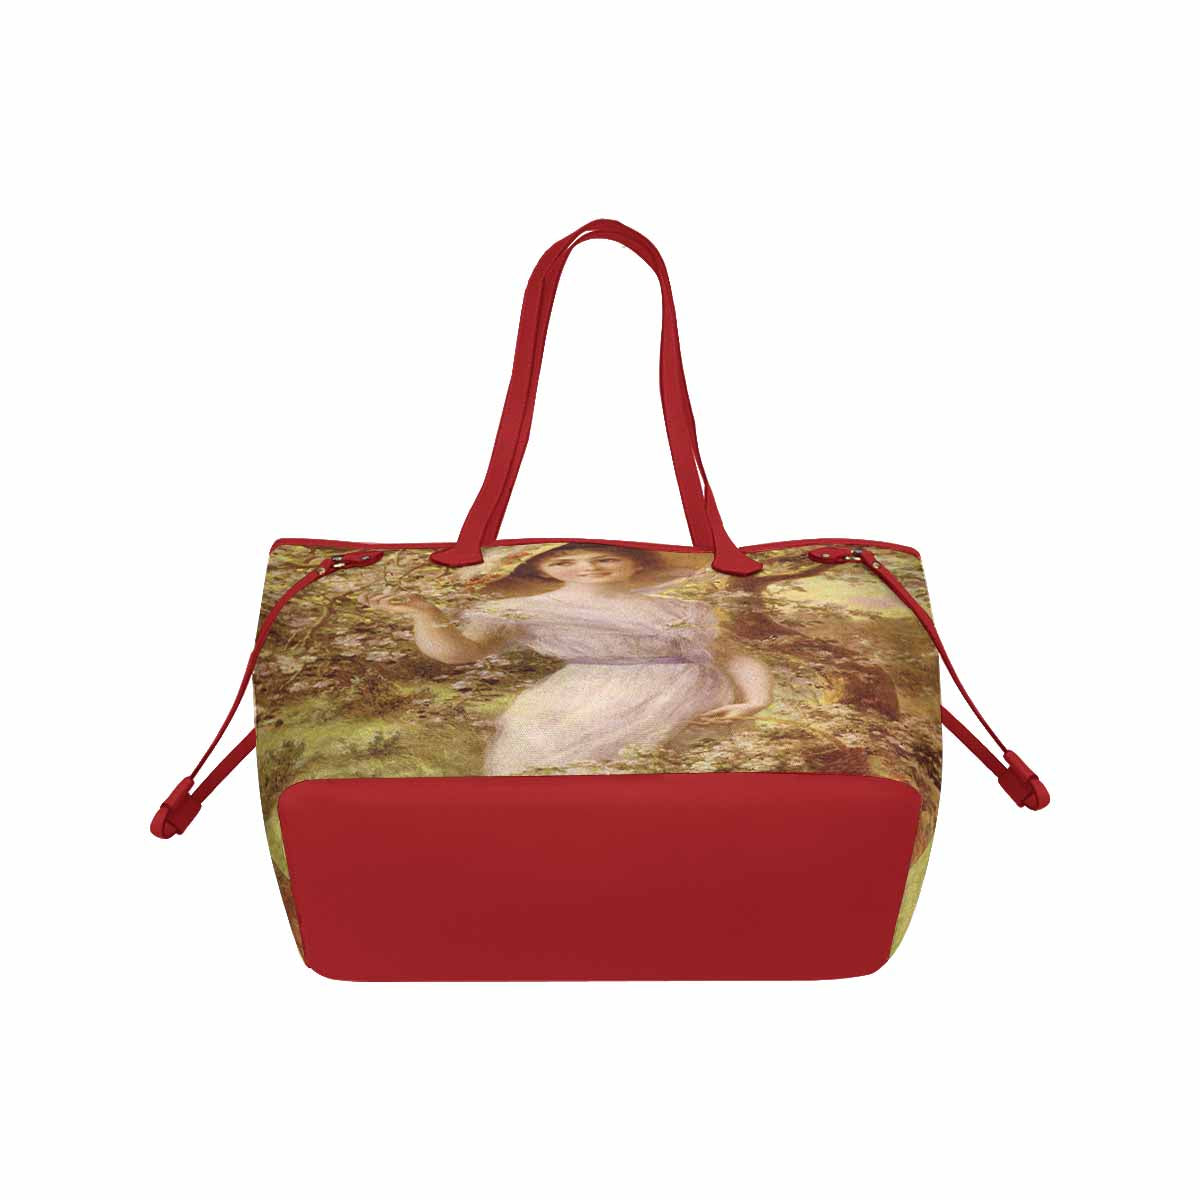 Victorian Lady Design Handbag, Model 1695361, Cherry Blossom, RED TRIM